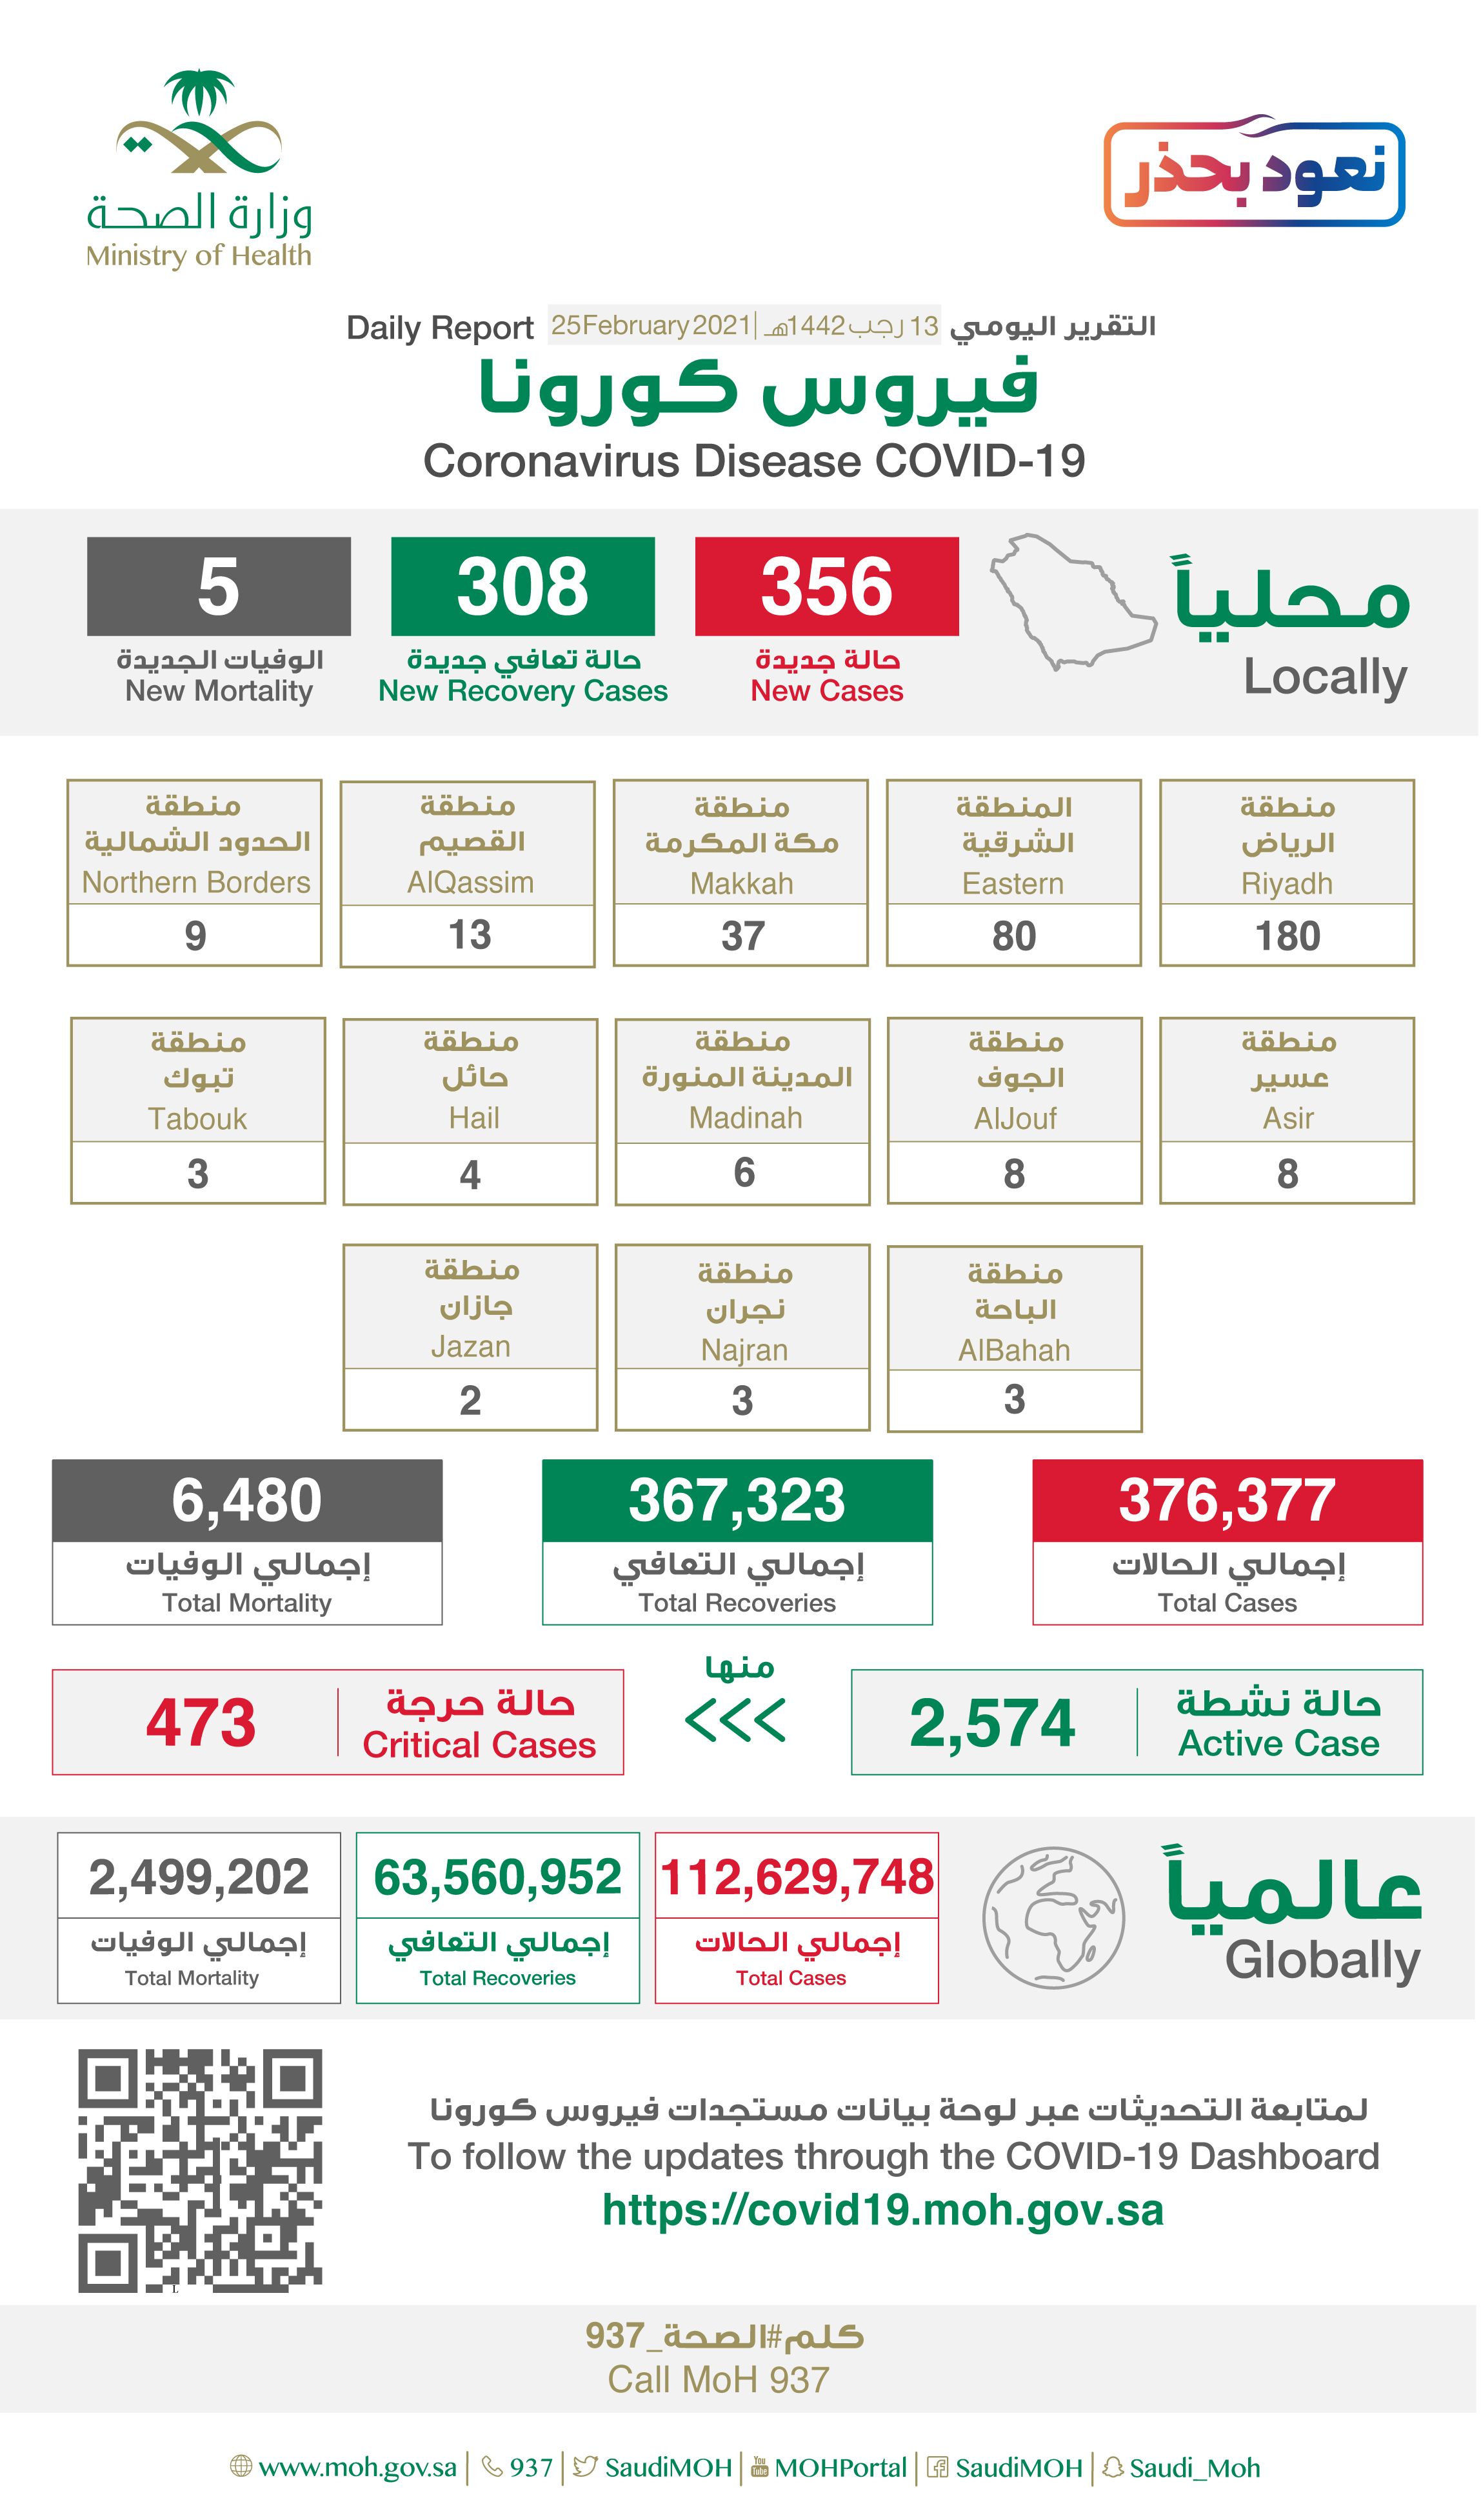 Saudi Arabia Coronavirus : Total Cases :376,377 , New Cases : 356, Cured : 367,323 , Deaths: 6,480, Active Cases : 2,574